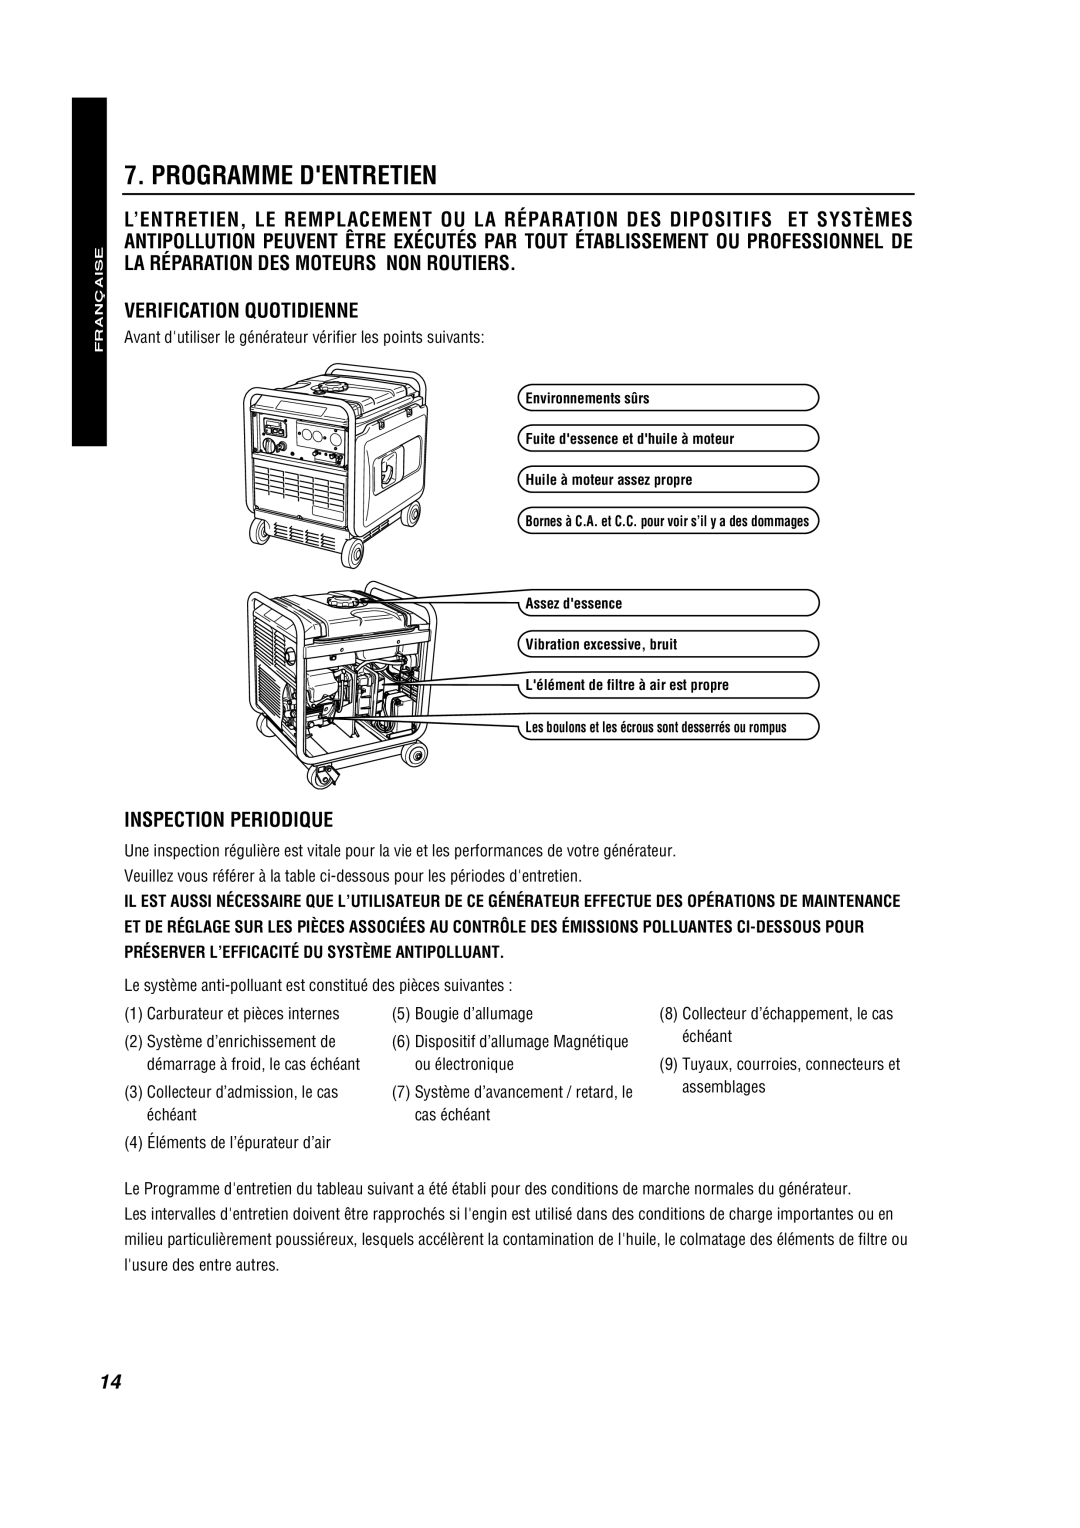 Subaru RG2800IS, RG4300IS, RG3200IS manual Programme Dentretien, Verification Quotidienne, Inspection Periodique, Française 